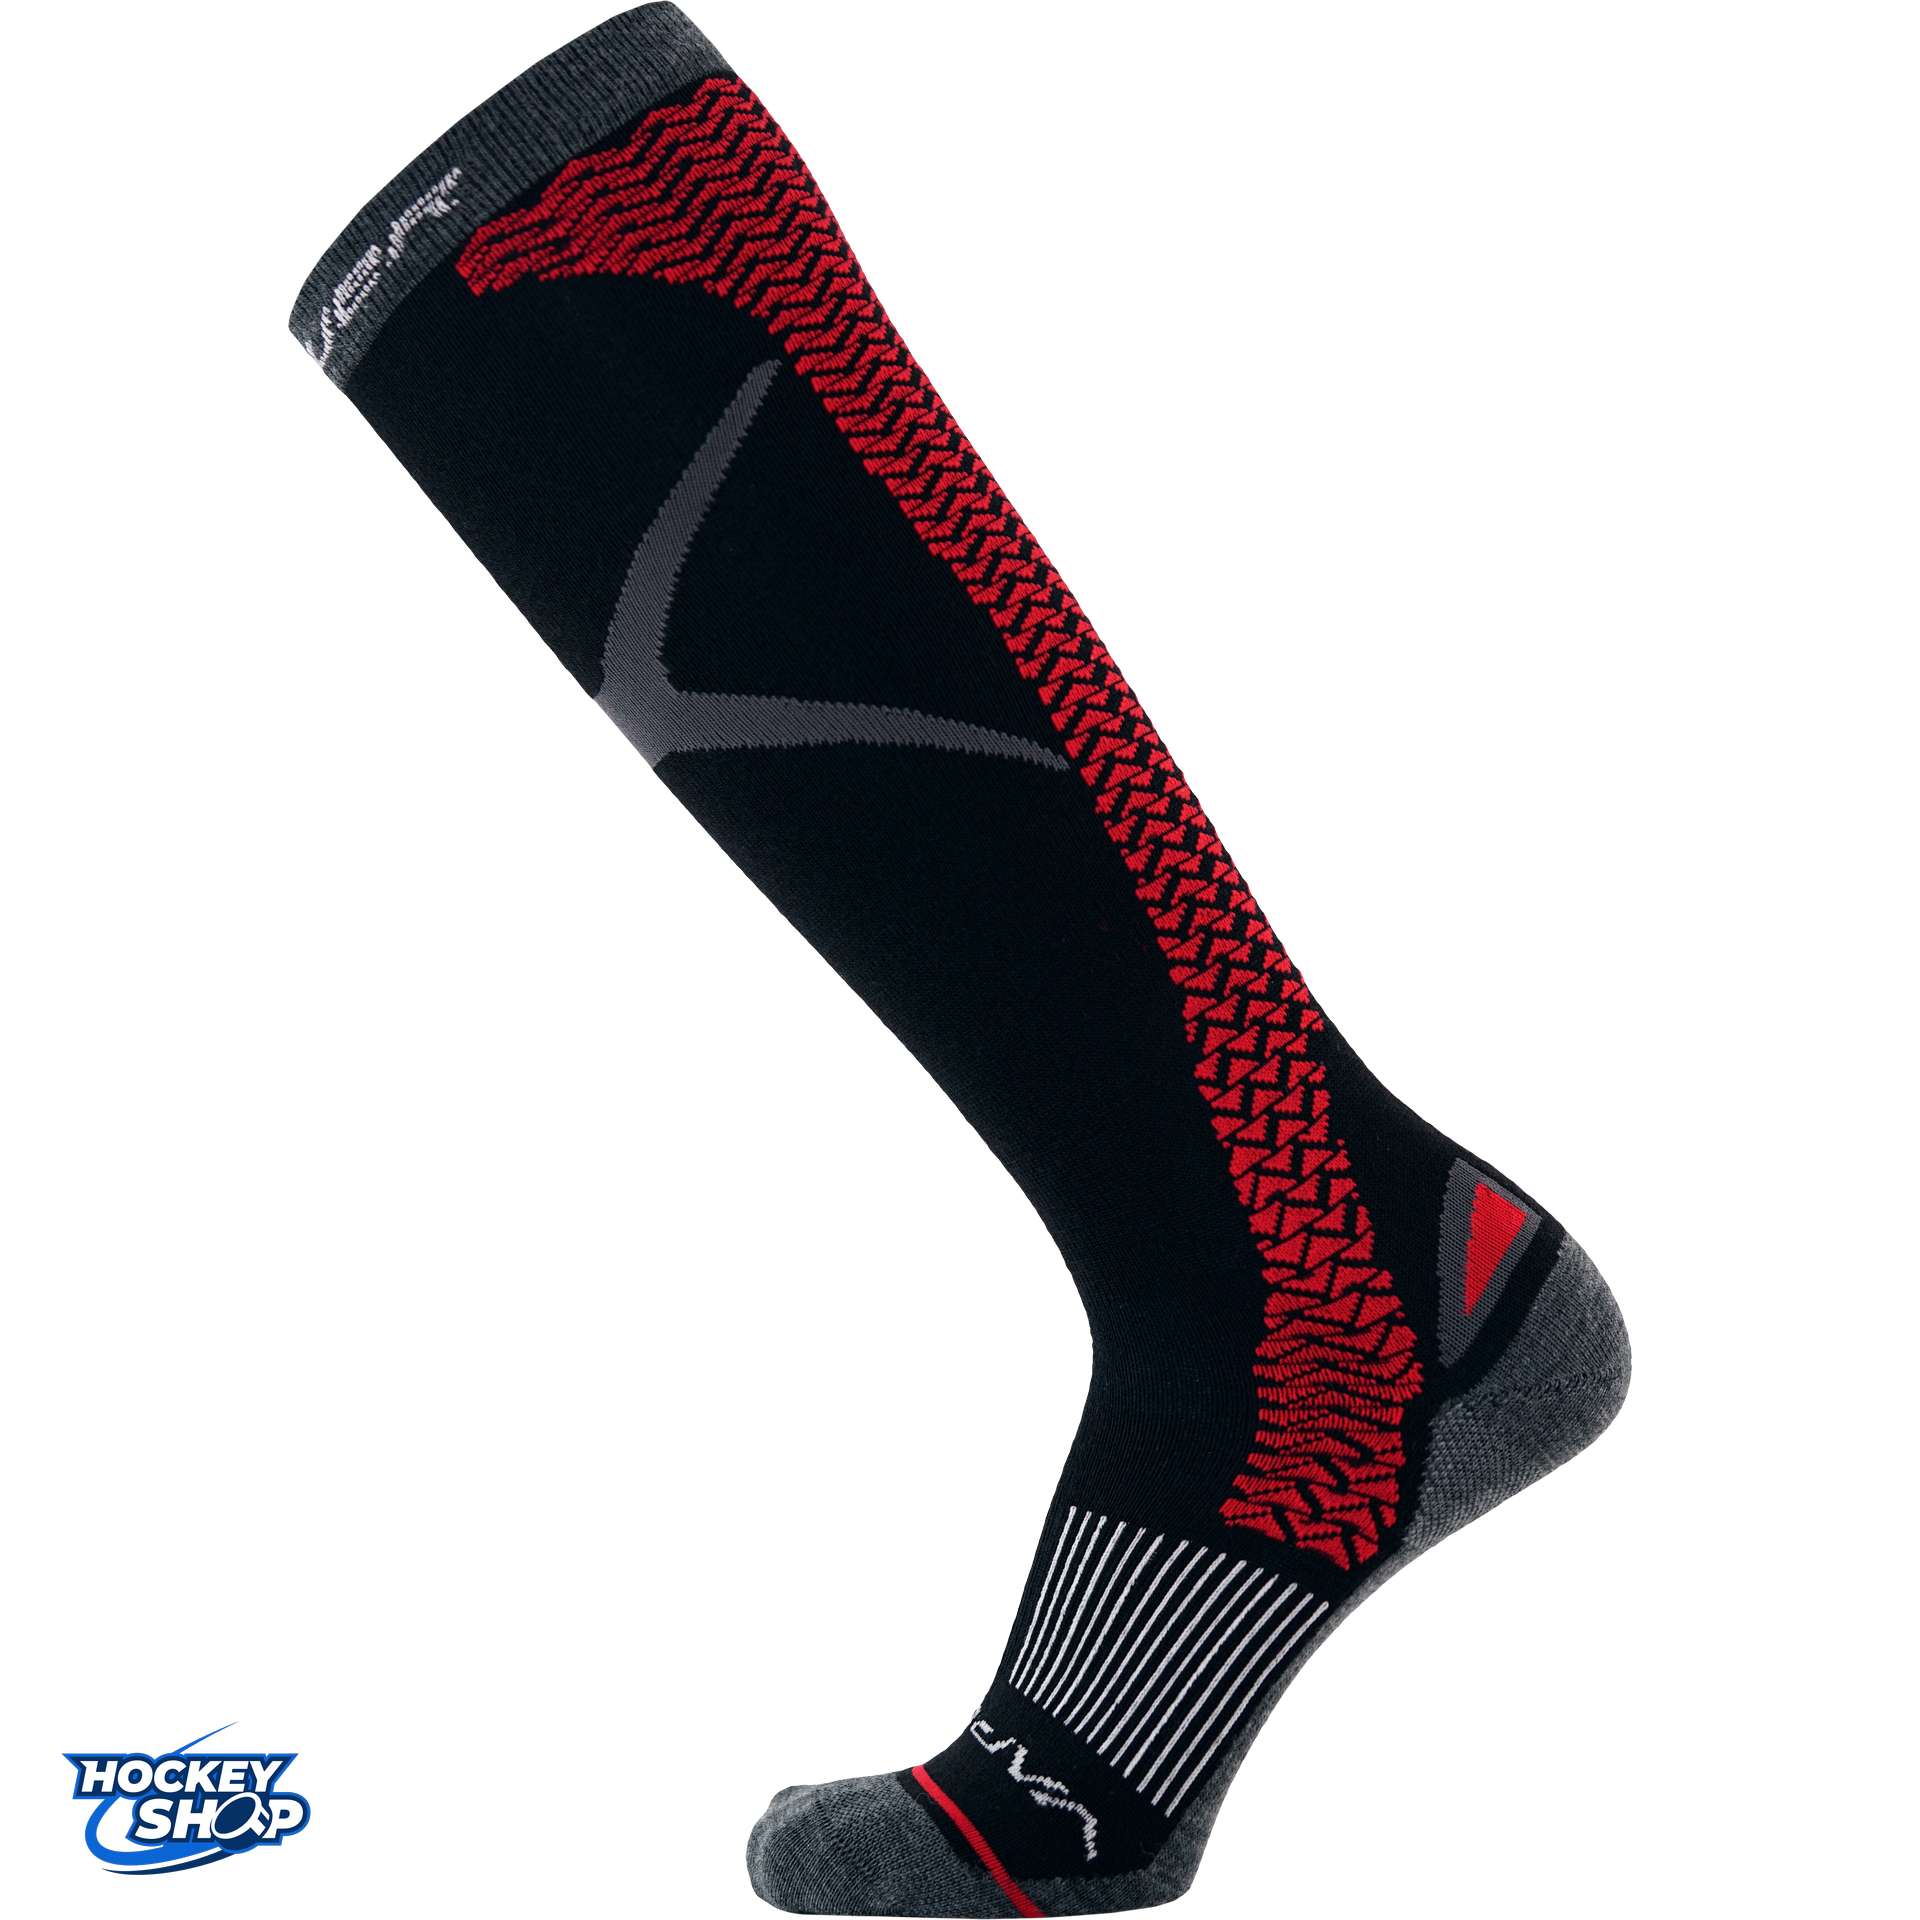 Bauer Pro Vapor Tall Skate Sock